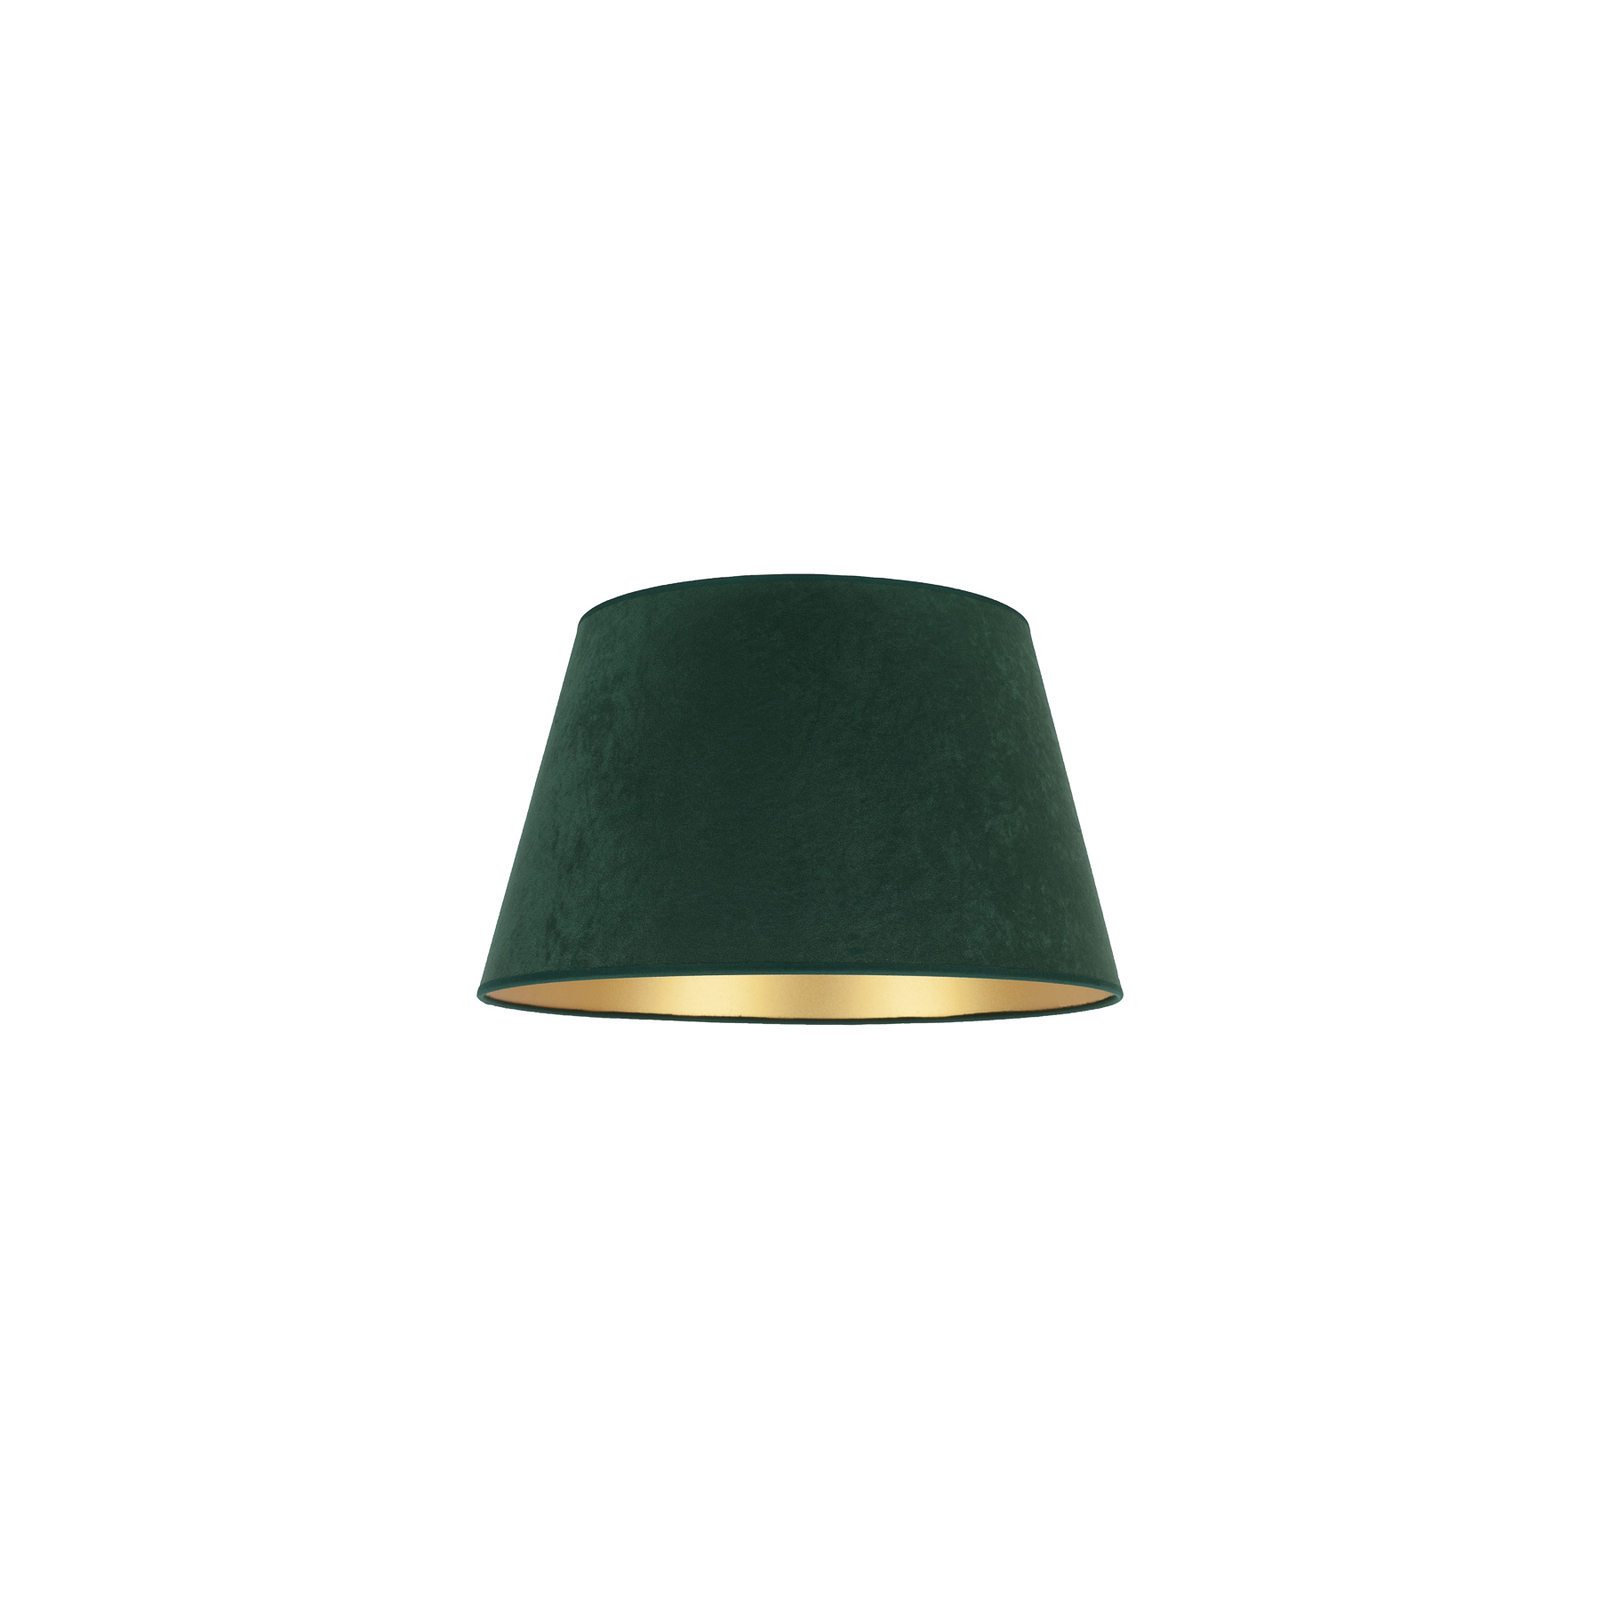 Lampenschirm Cone Höhe 18 cm, dunkelgrün/gold